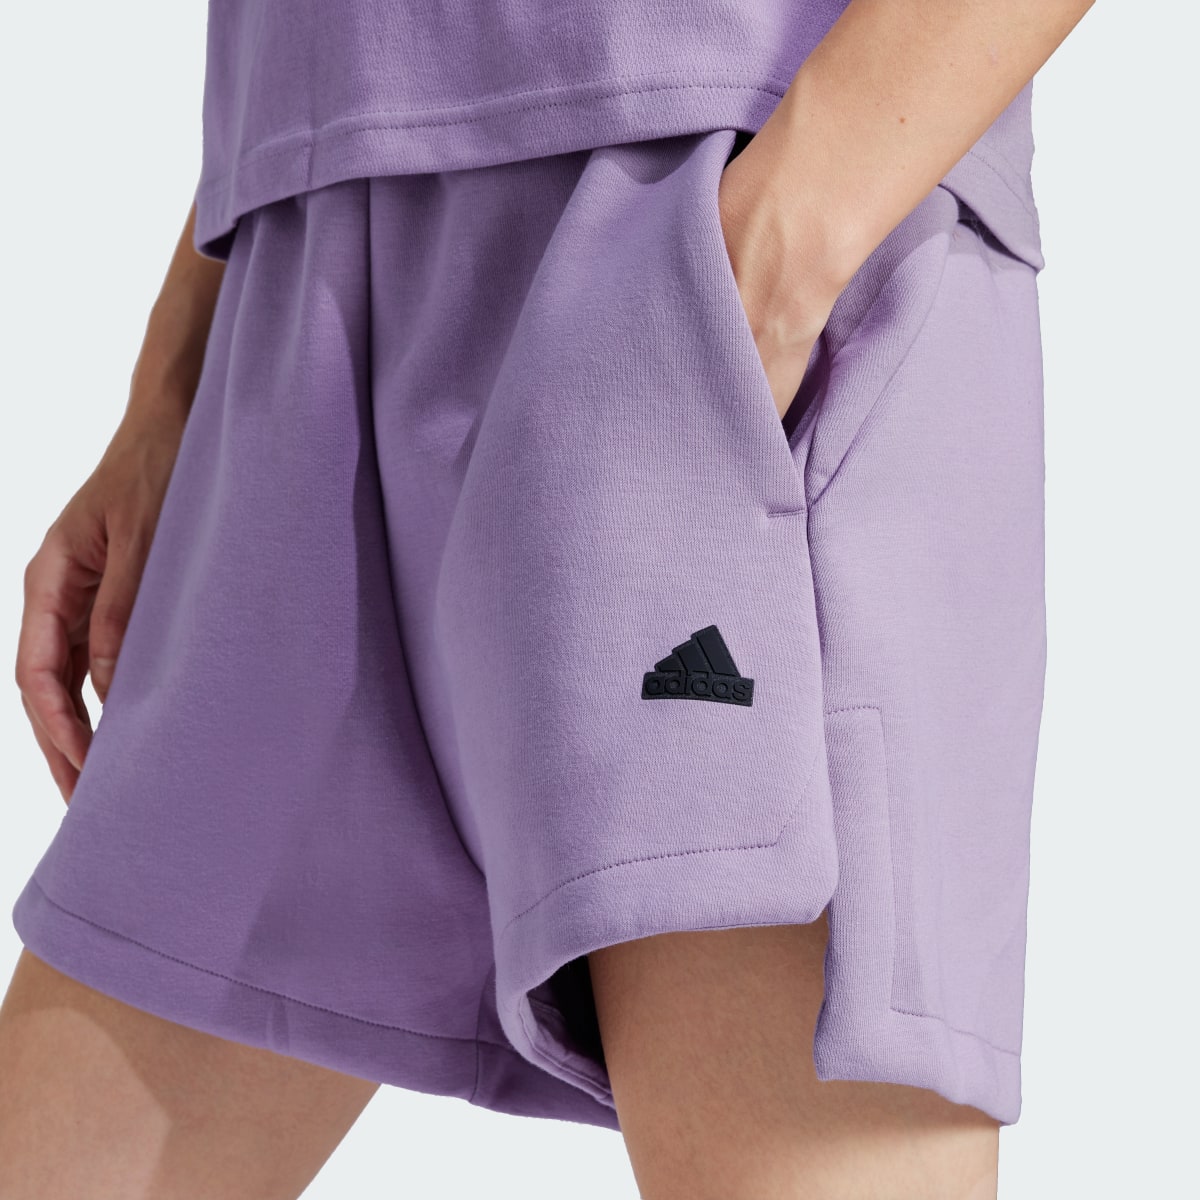 Adidas Z.N.E. Shorts. 5